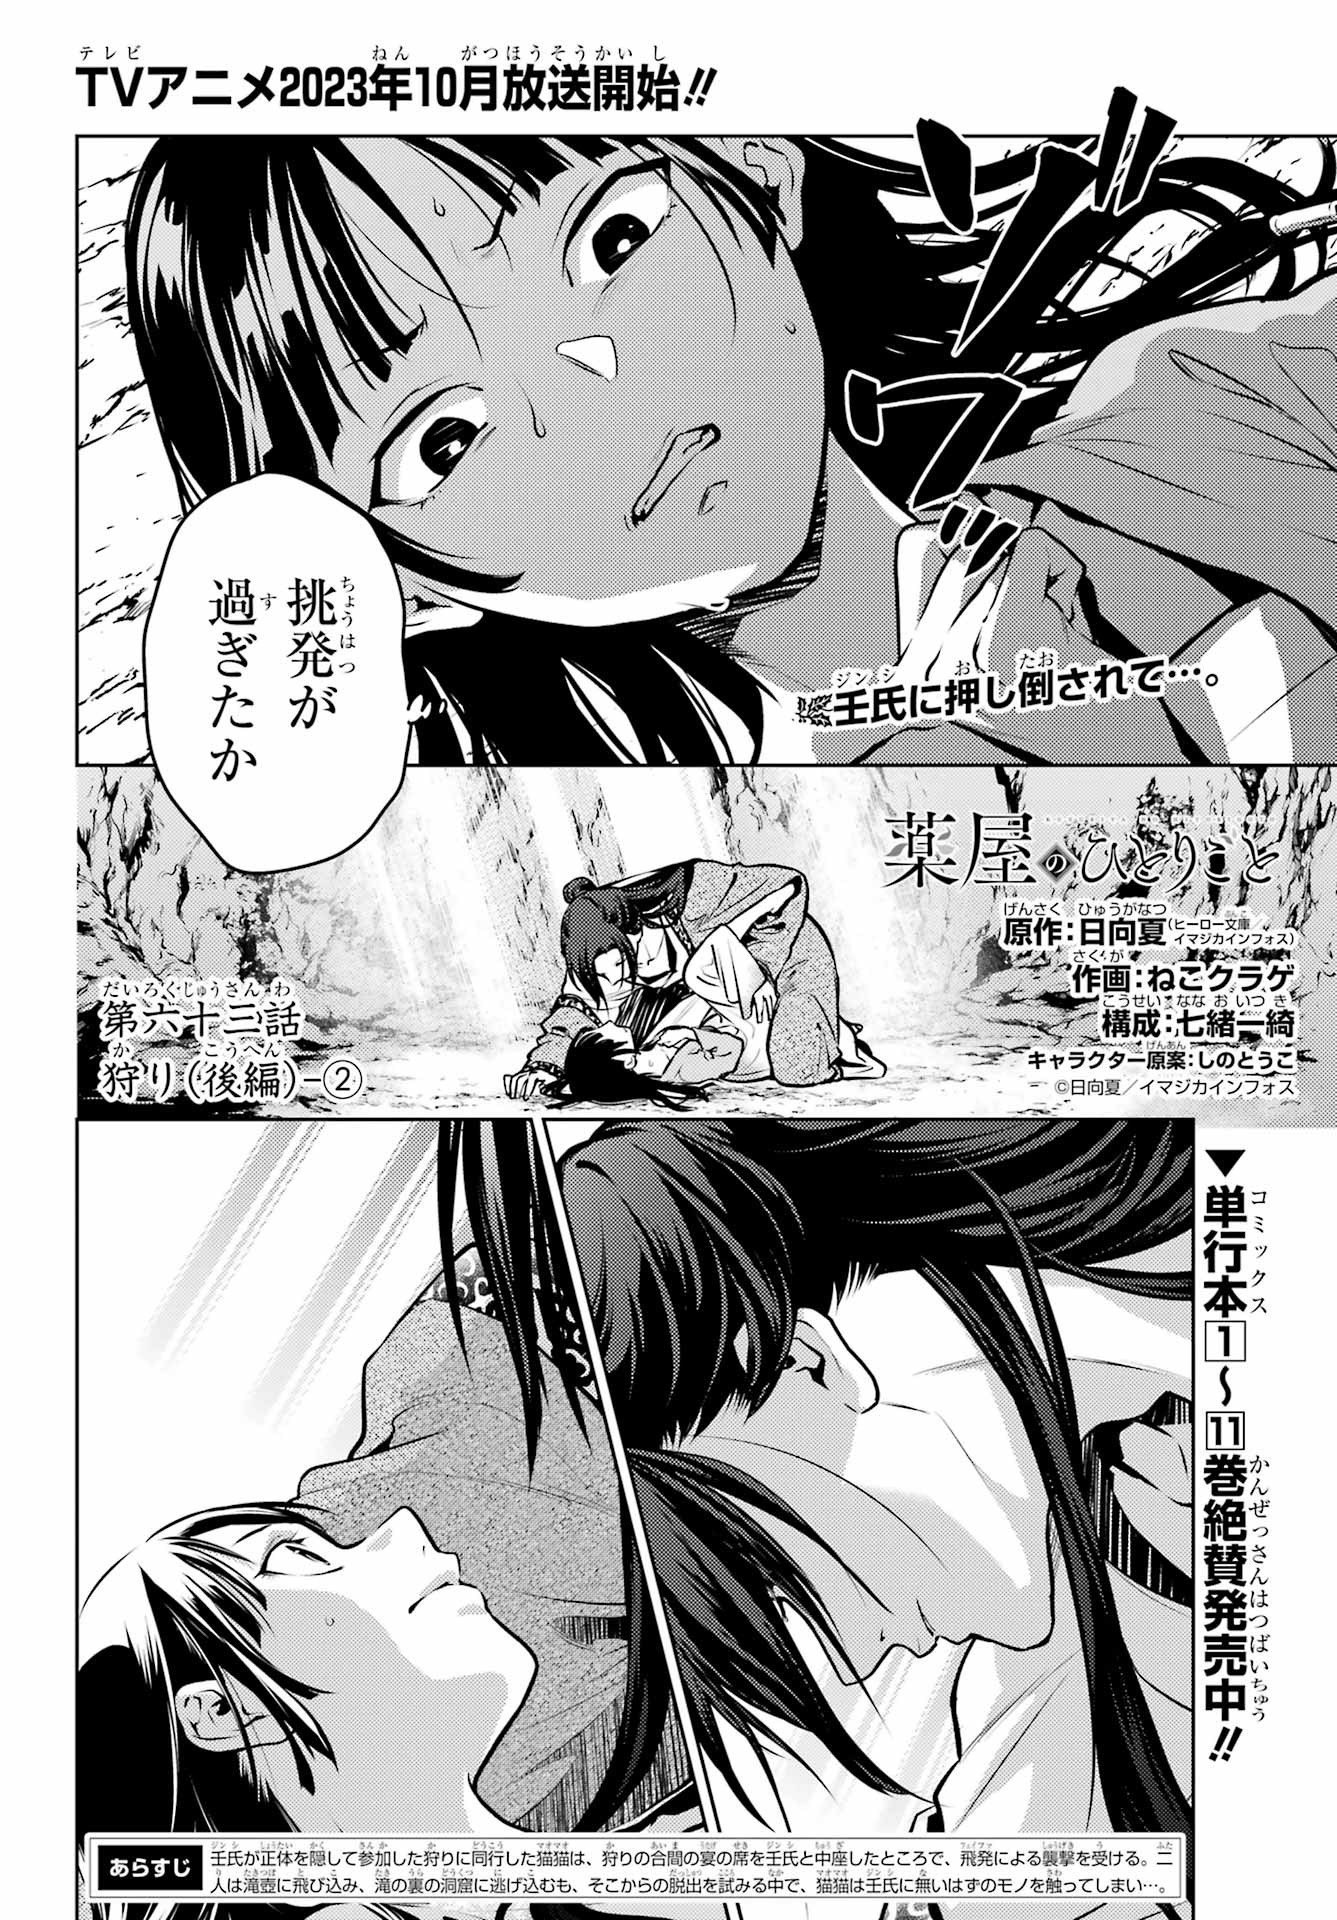 Kusuriya no Hitorigoto - Chapter 63-2 - Page 1